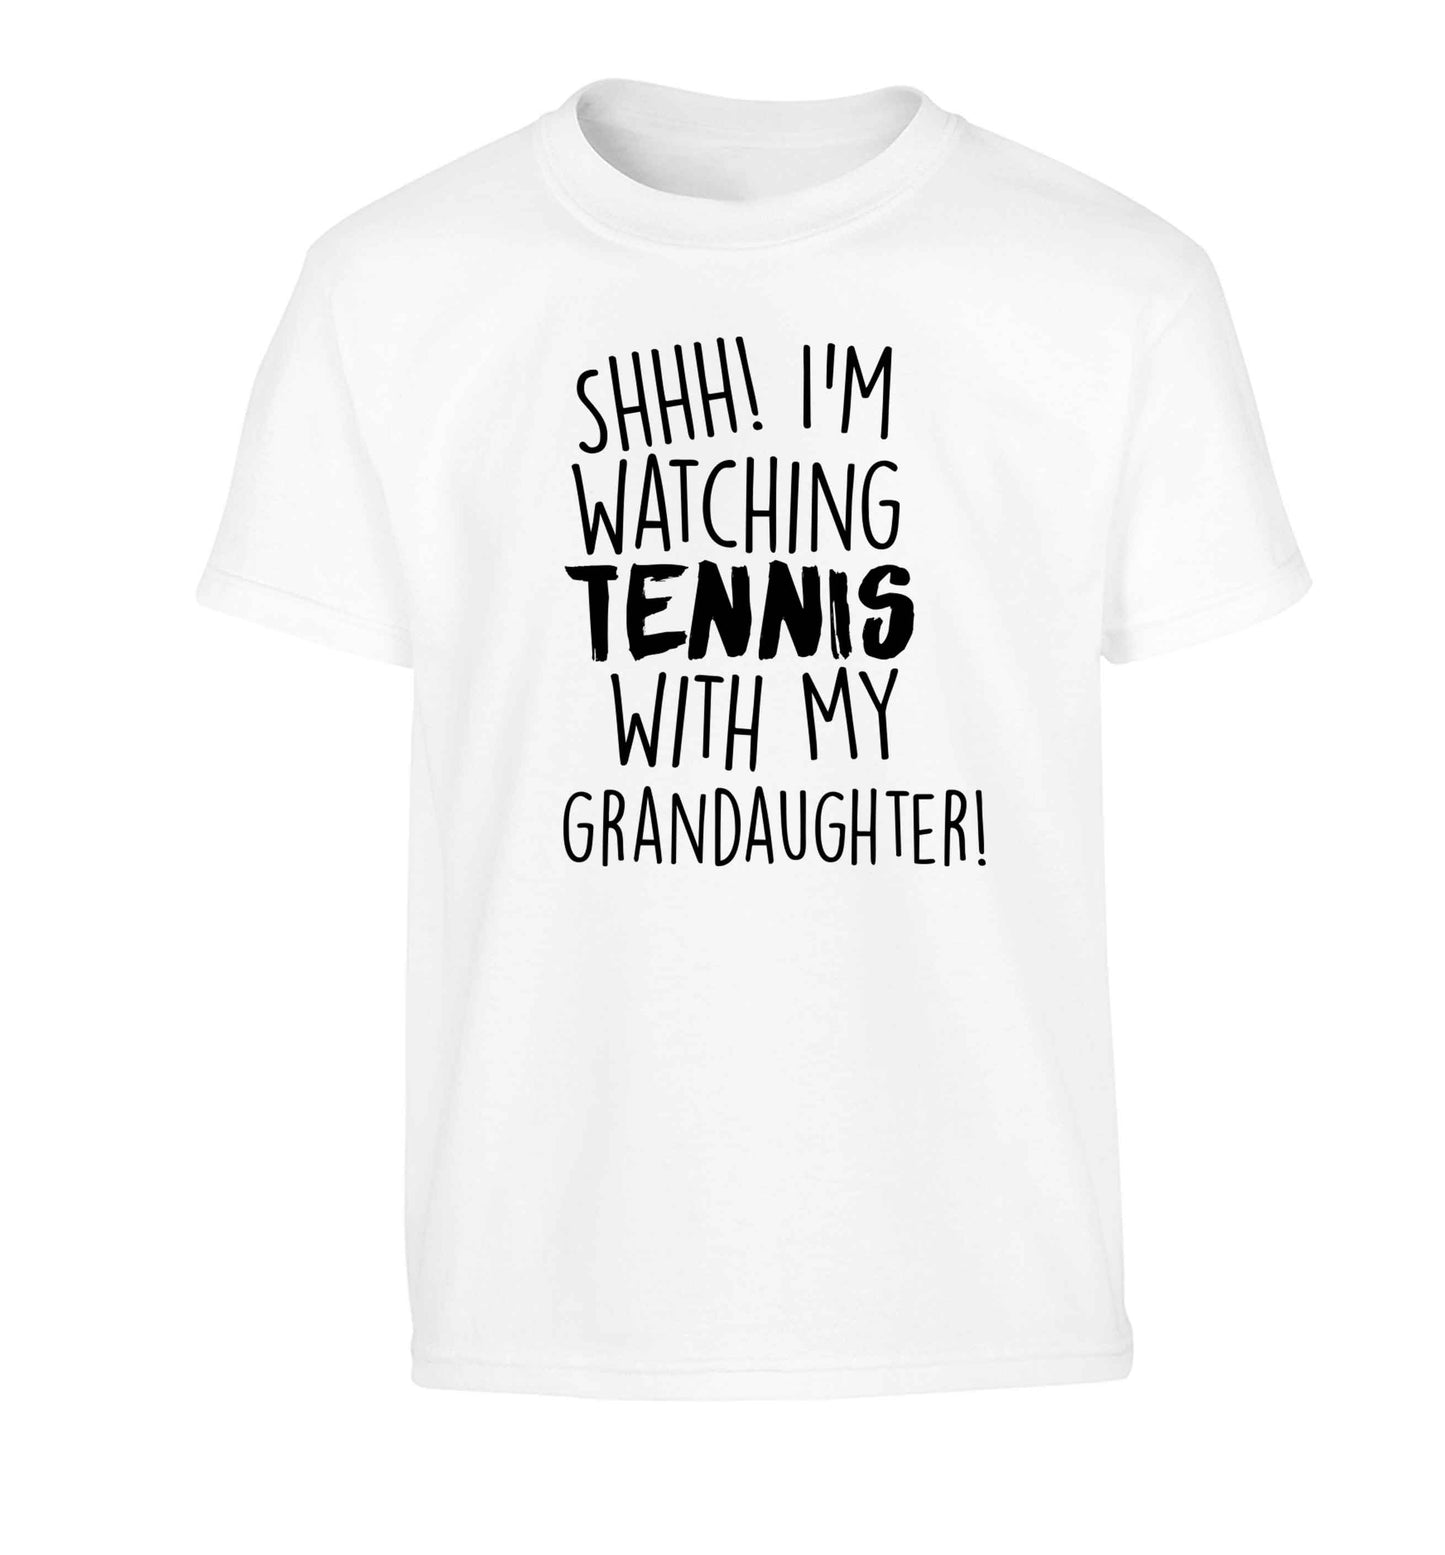 Shh! I'm watching tennis with my granddaughter! Children's white Tshirt 12-13 Years